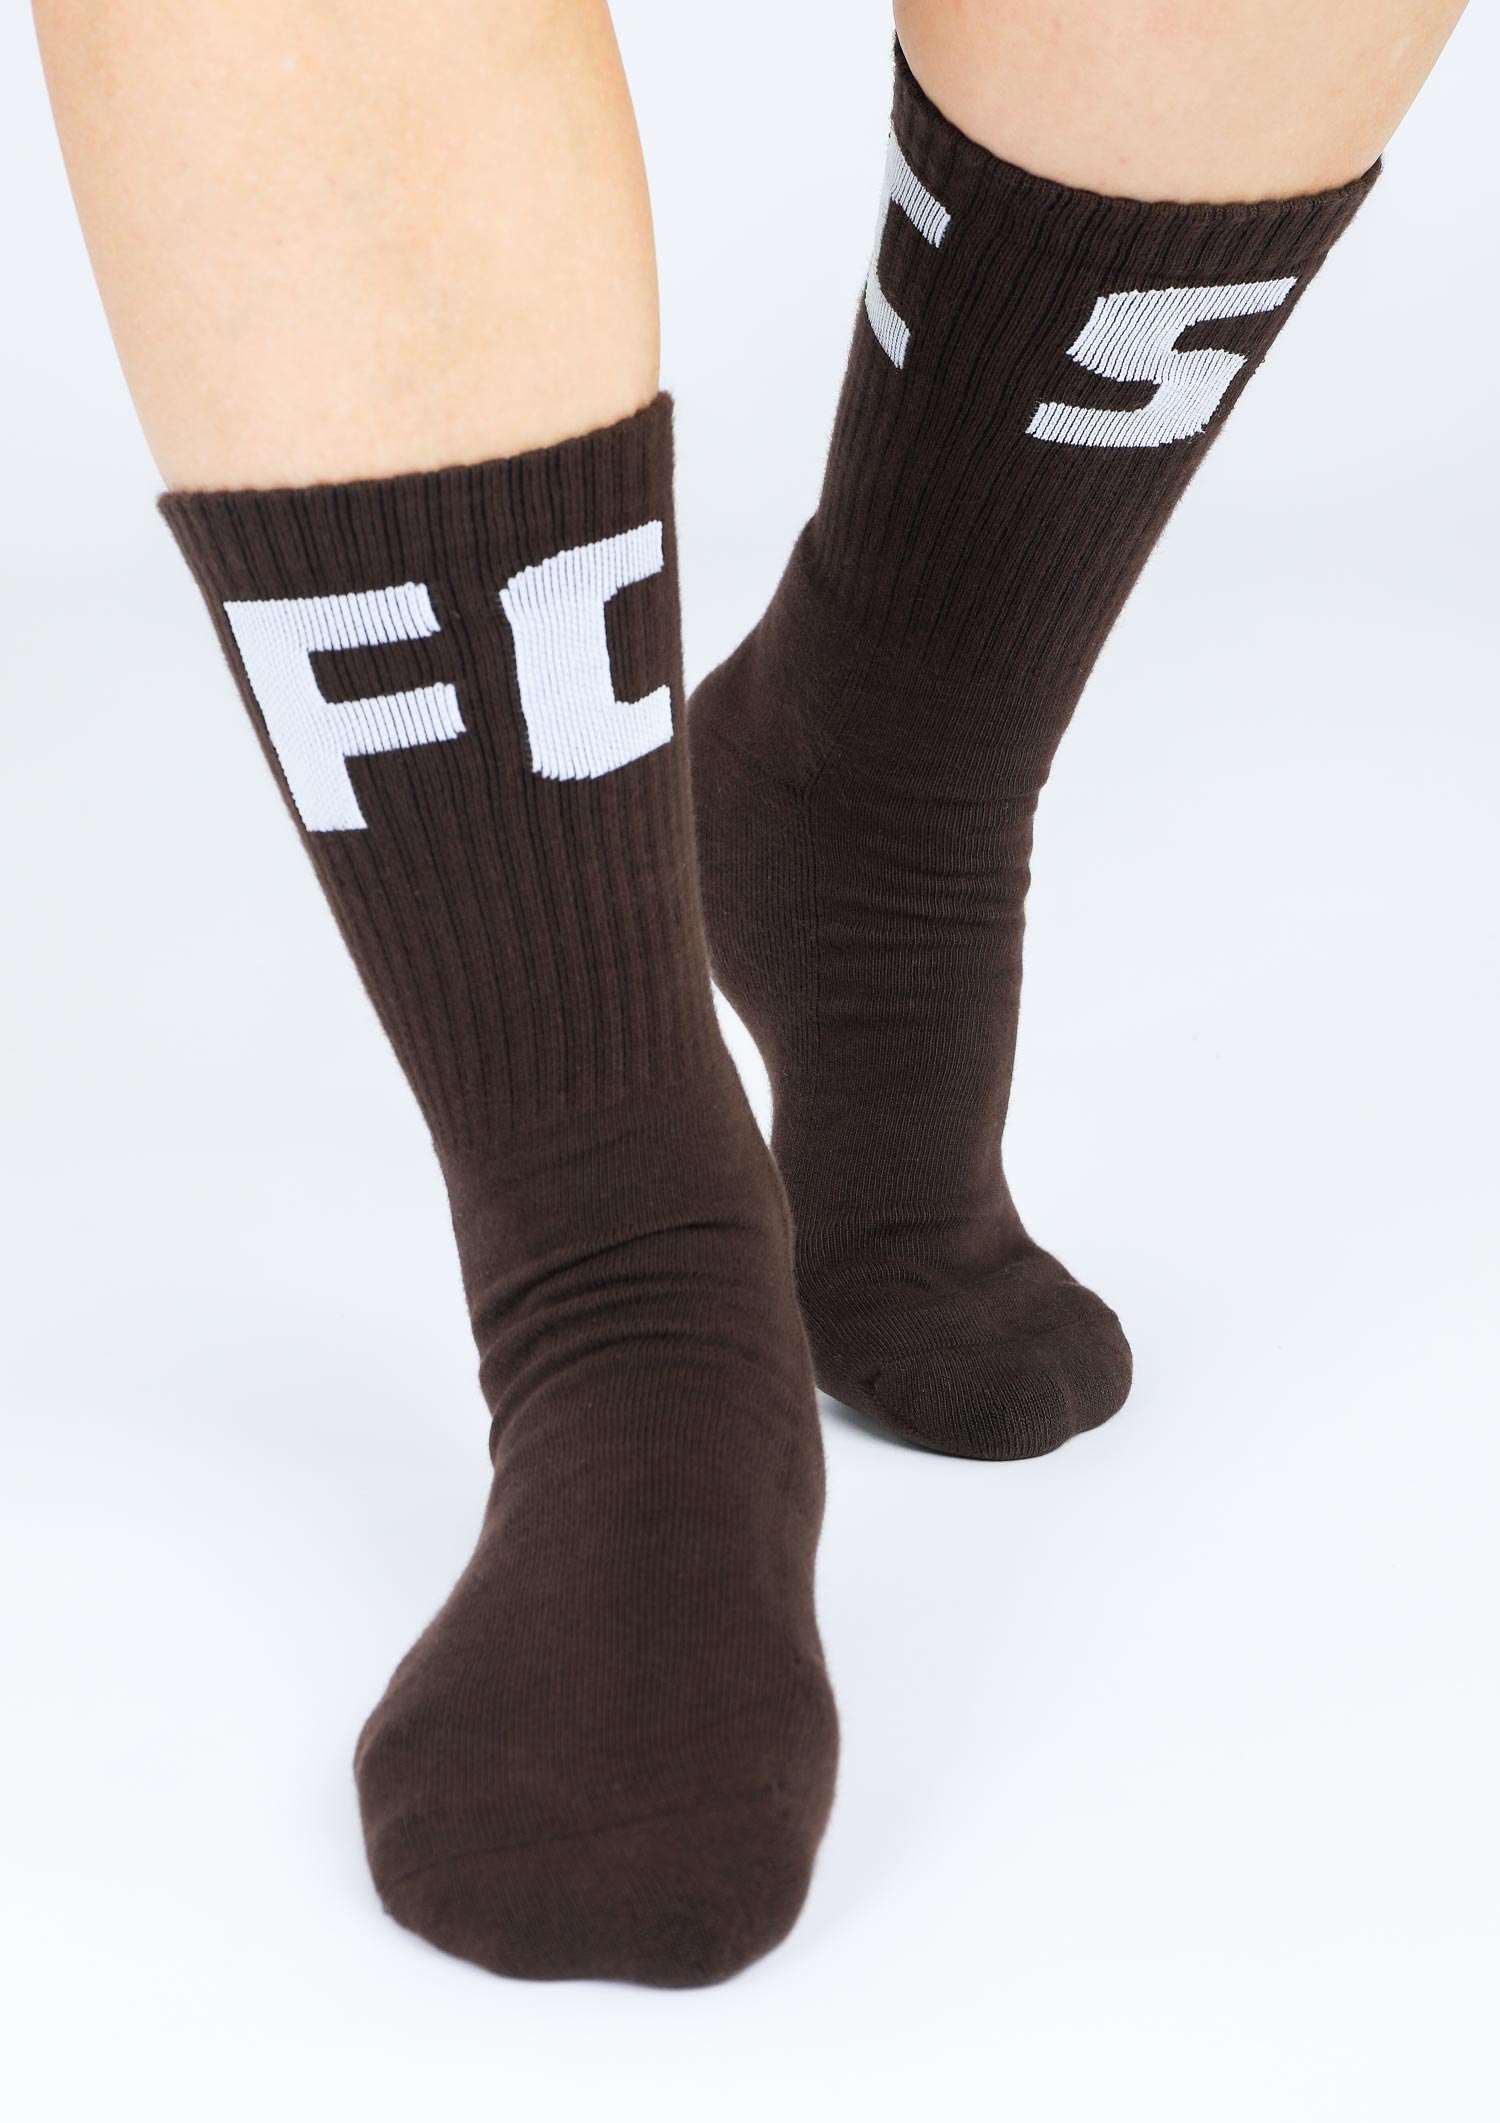 Tennis socks "FCSP" brown-white